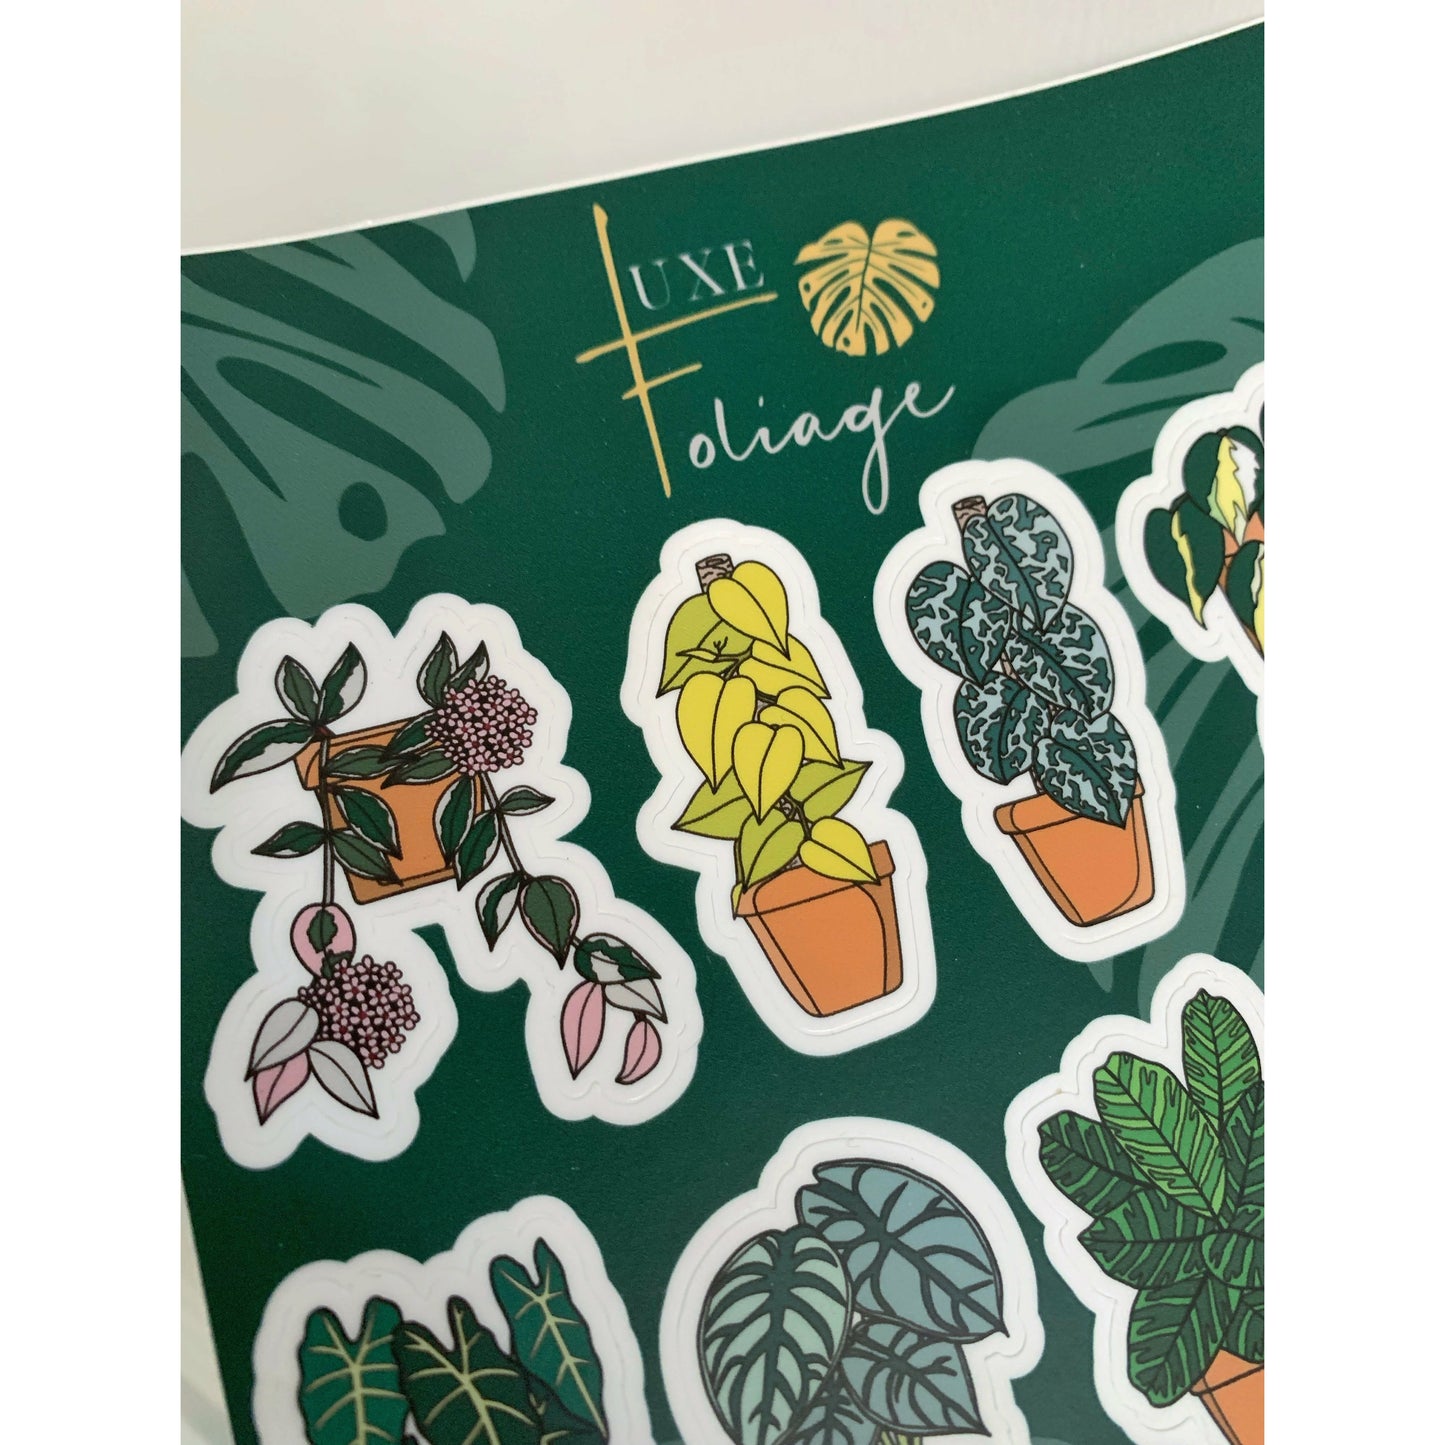 Luxe Foliage Plant Sticker Sheet